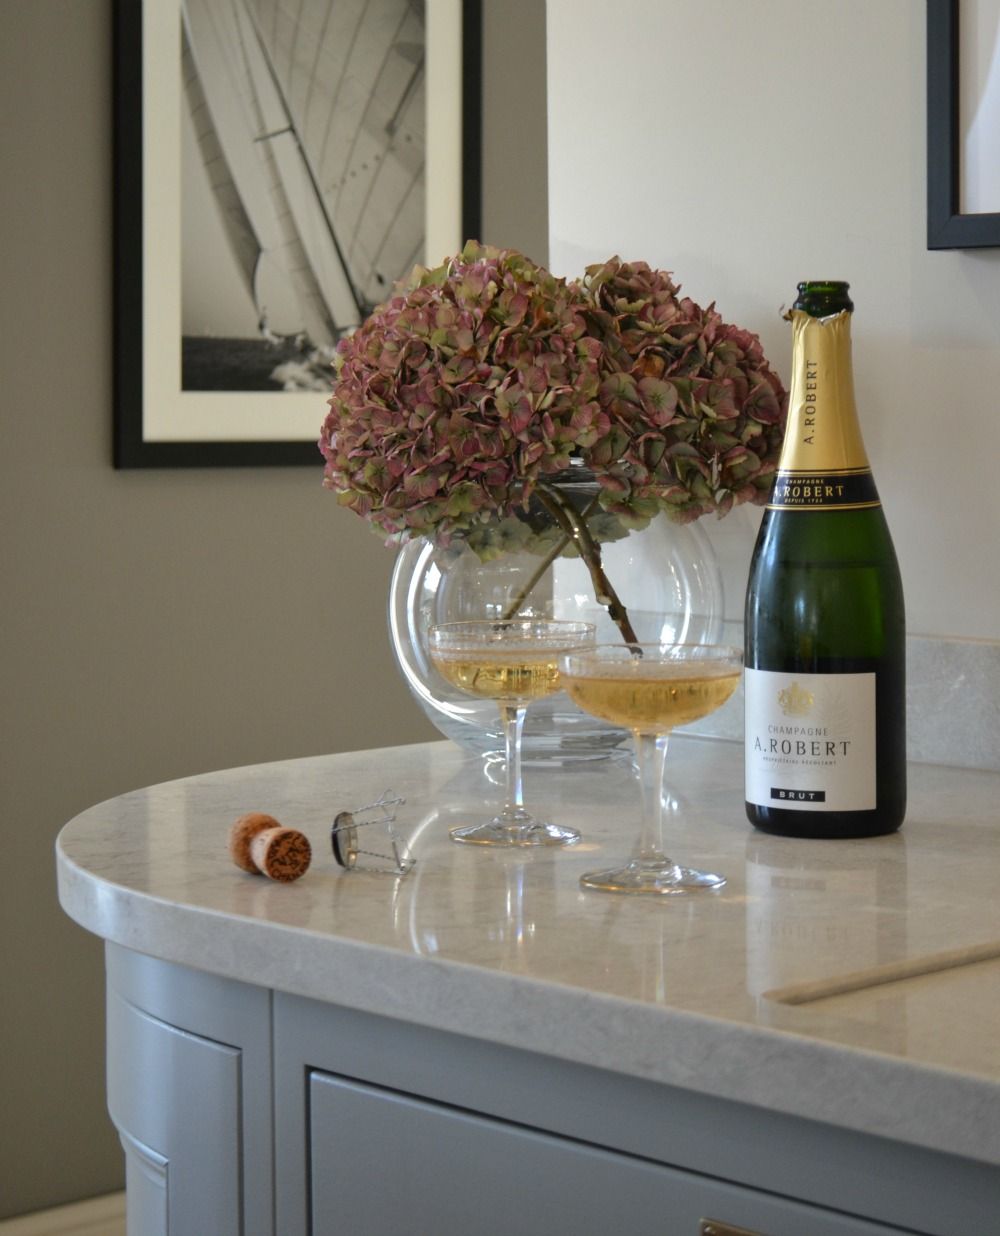 Champagne A. Robert - Perfect Festive Fizz - Humphrey Munson Blog 2